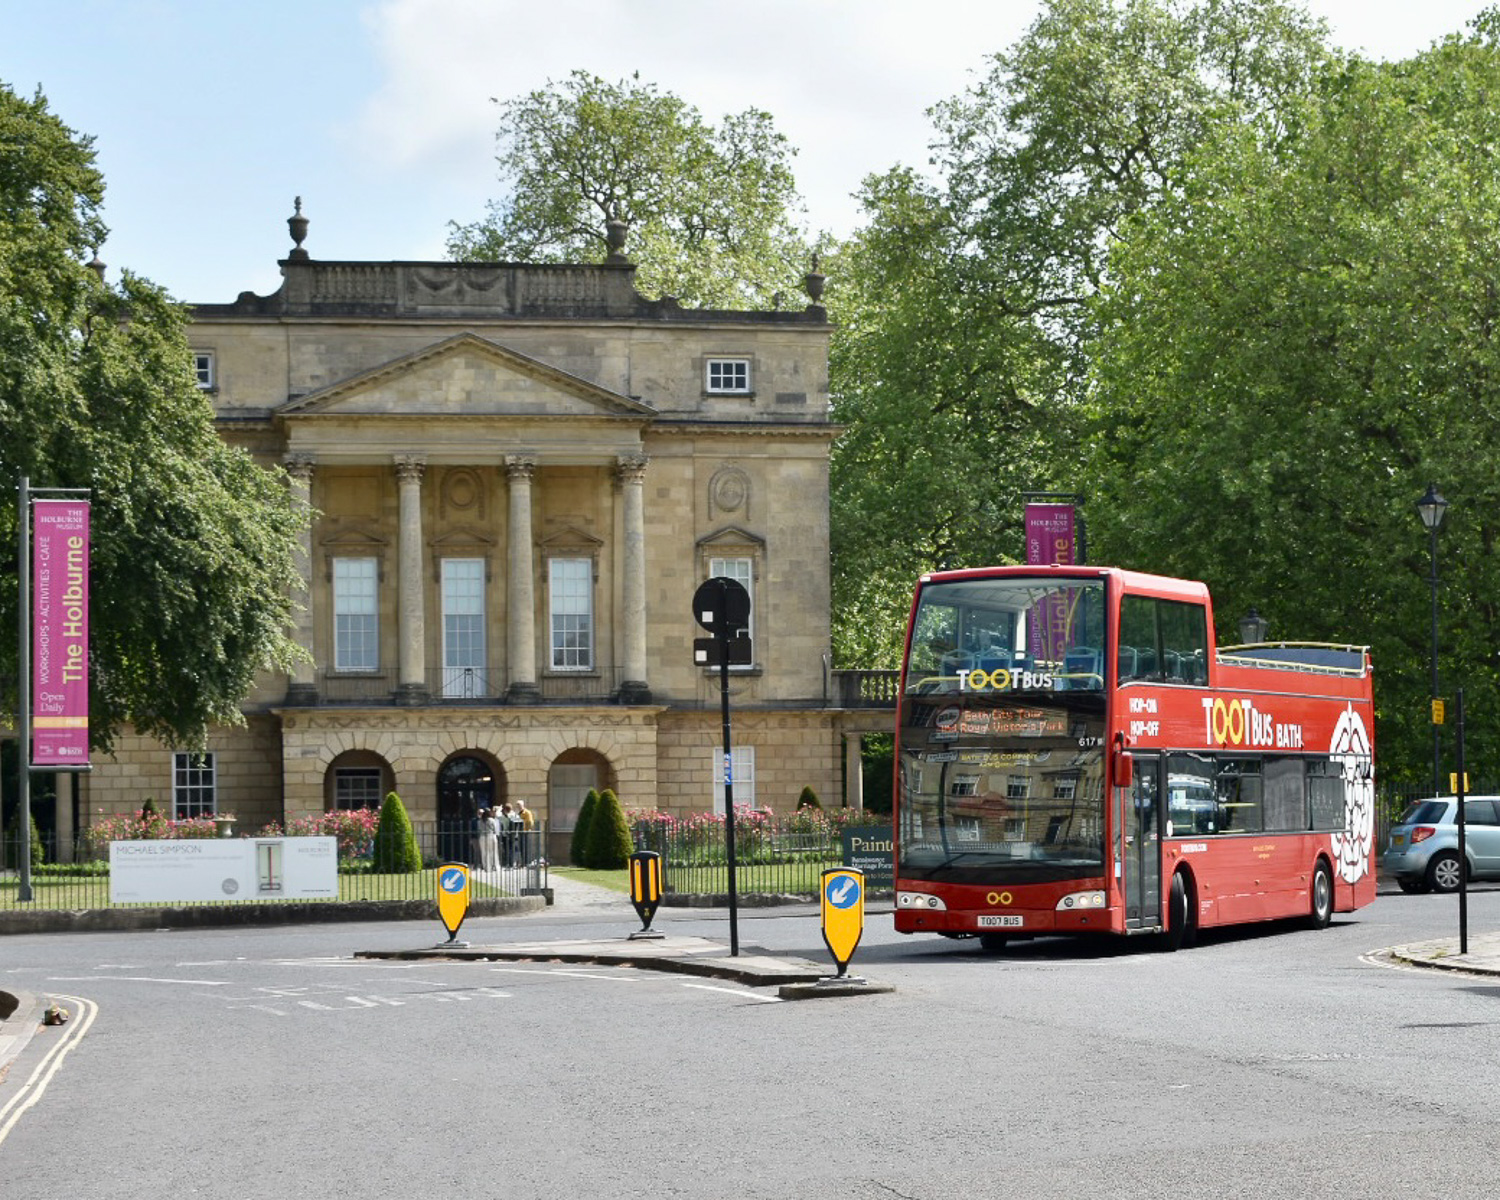 Sightseeing bus tour in Bath Photo Visit Bath